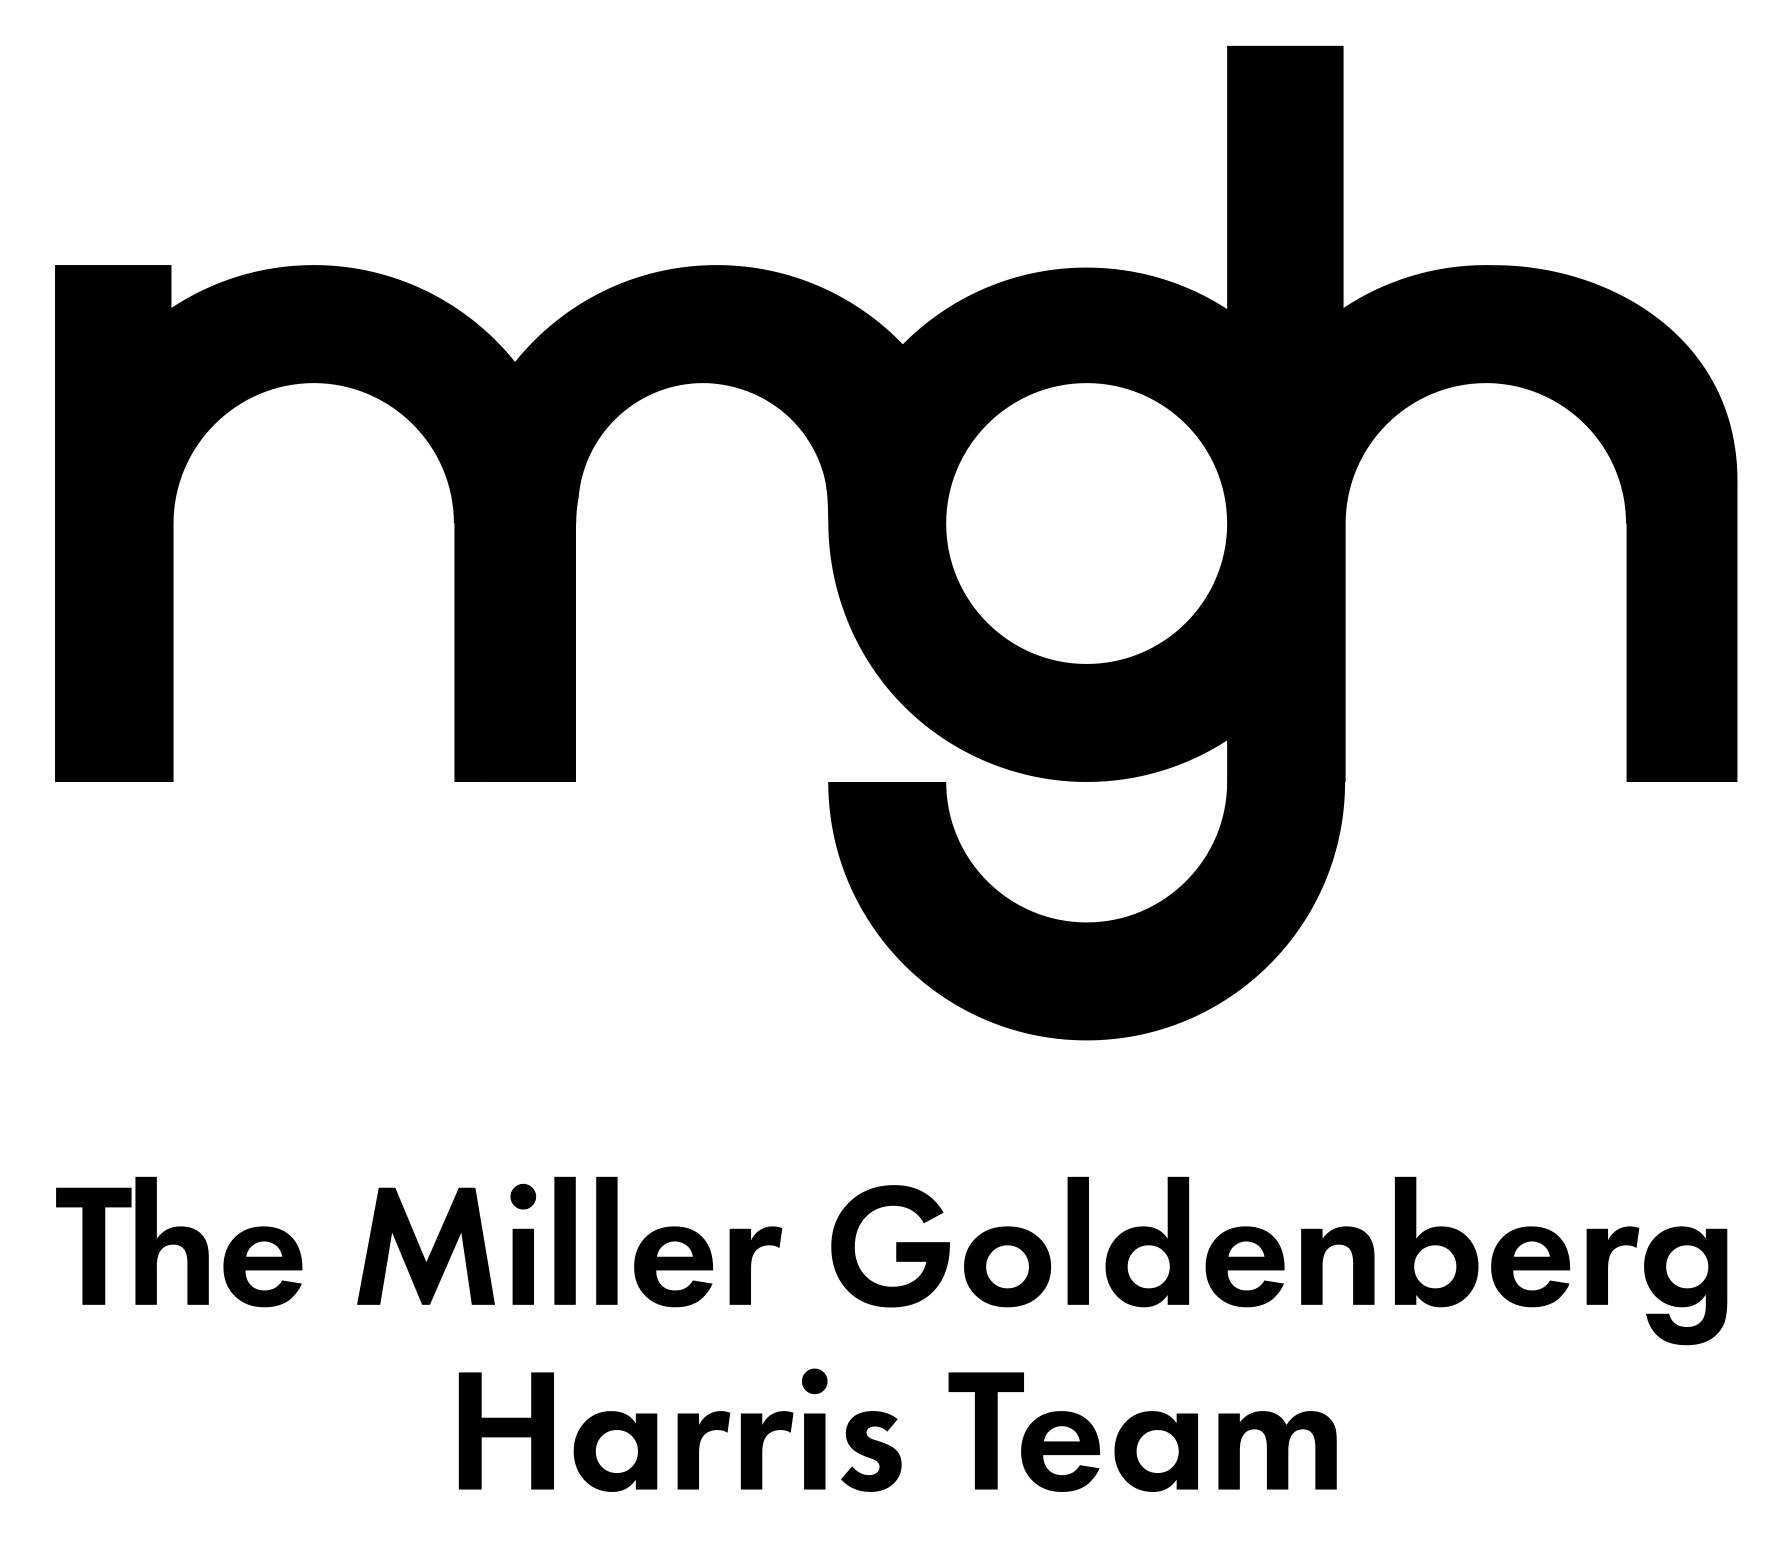 A text banner for The Miller Goldenberg.